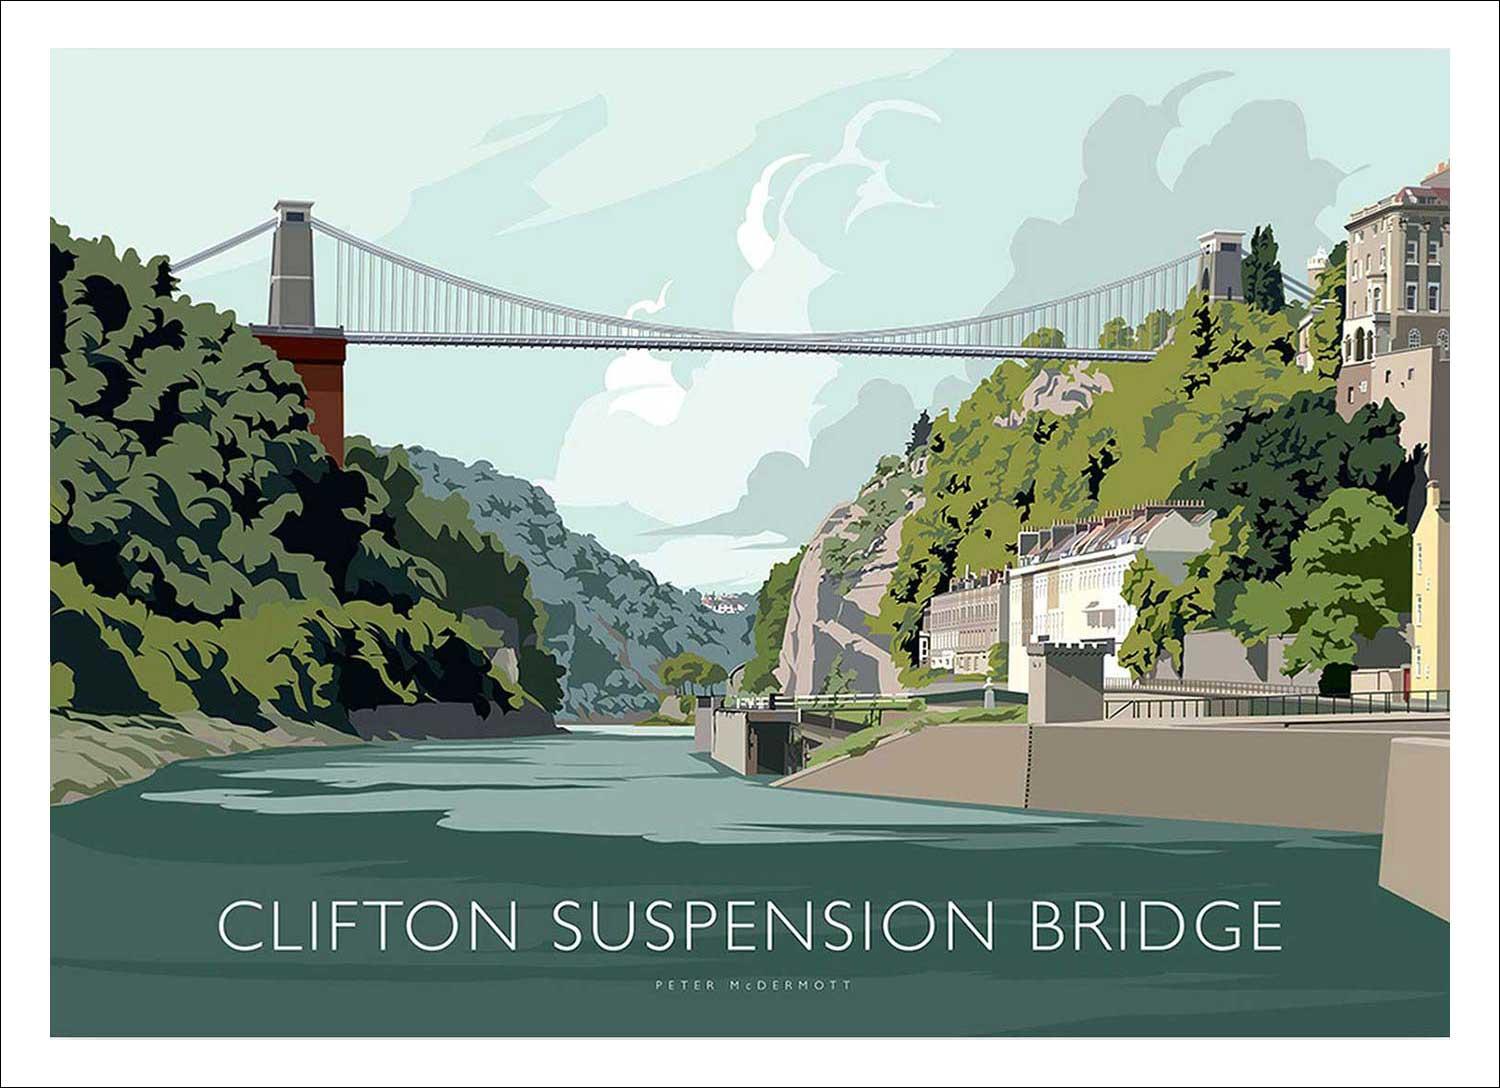 Clifton Suspension Bridge (Green) Art Print from an original illustration by artist Peter McDermott